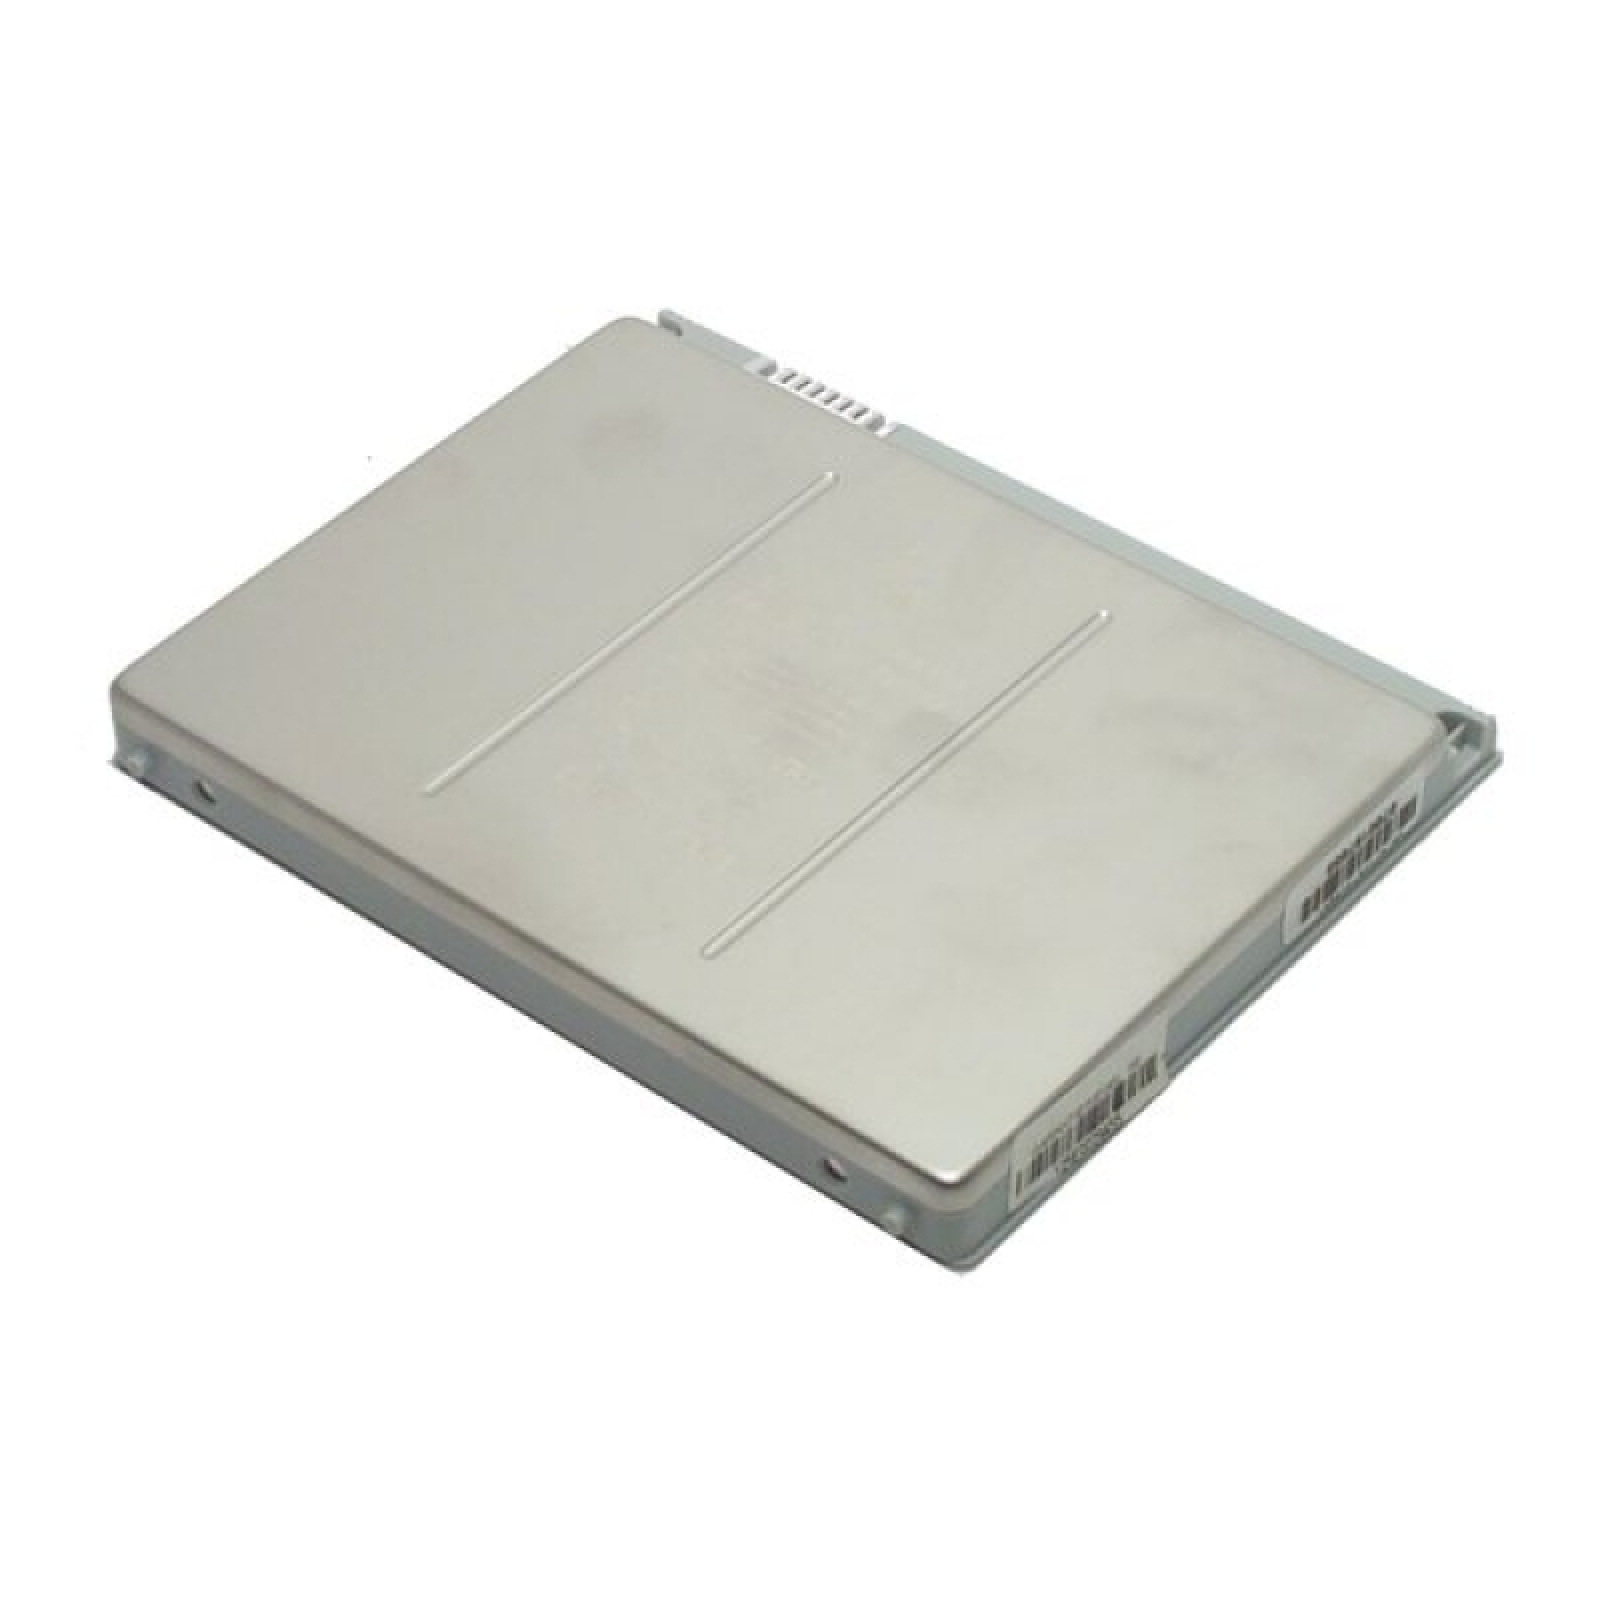 LiPolymer, MacBook Pro 5200mAh, APPLE 10.8V, Notebook-Akku, 2.16GHz 10.8 silber (2006.10) Lithium-Polymer 5200 für MTXTEC 15.4\'\' (LiPoly) mAh Akku Volt,